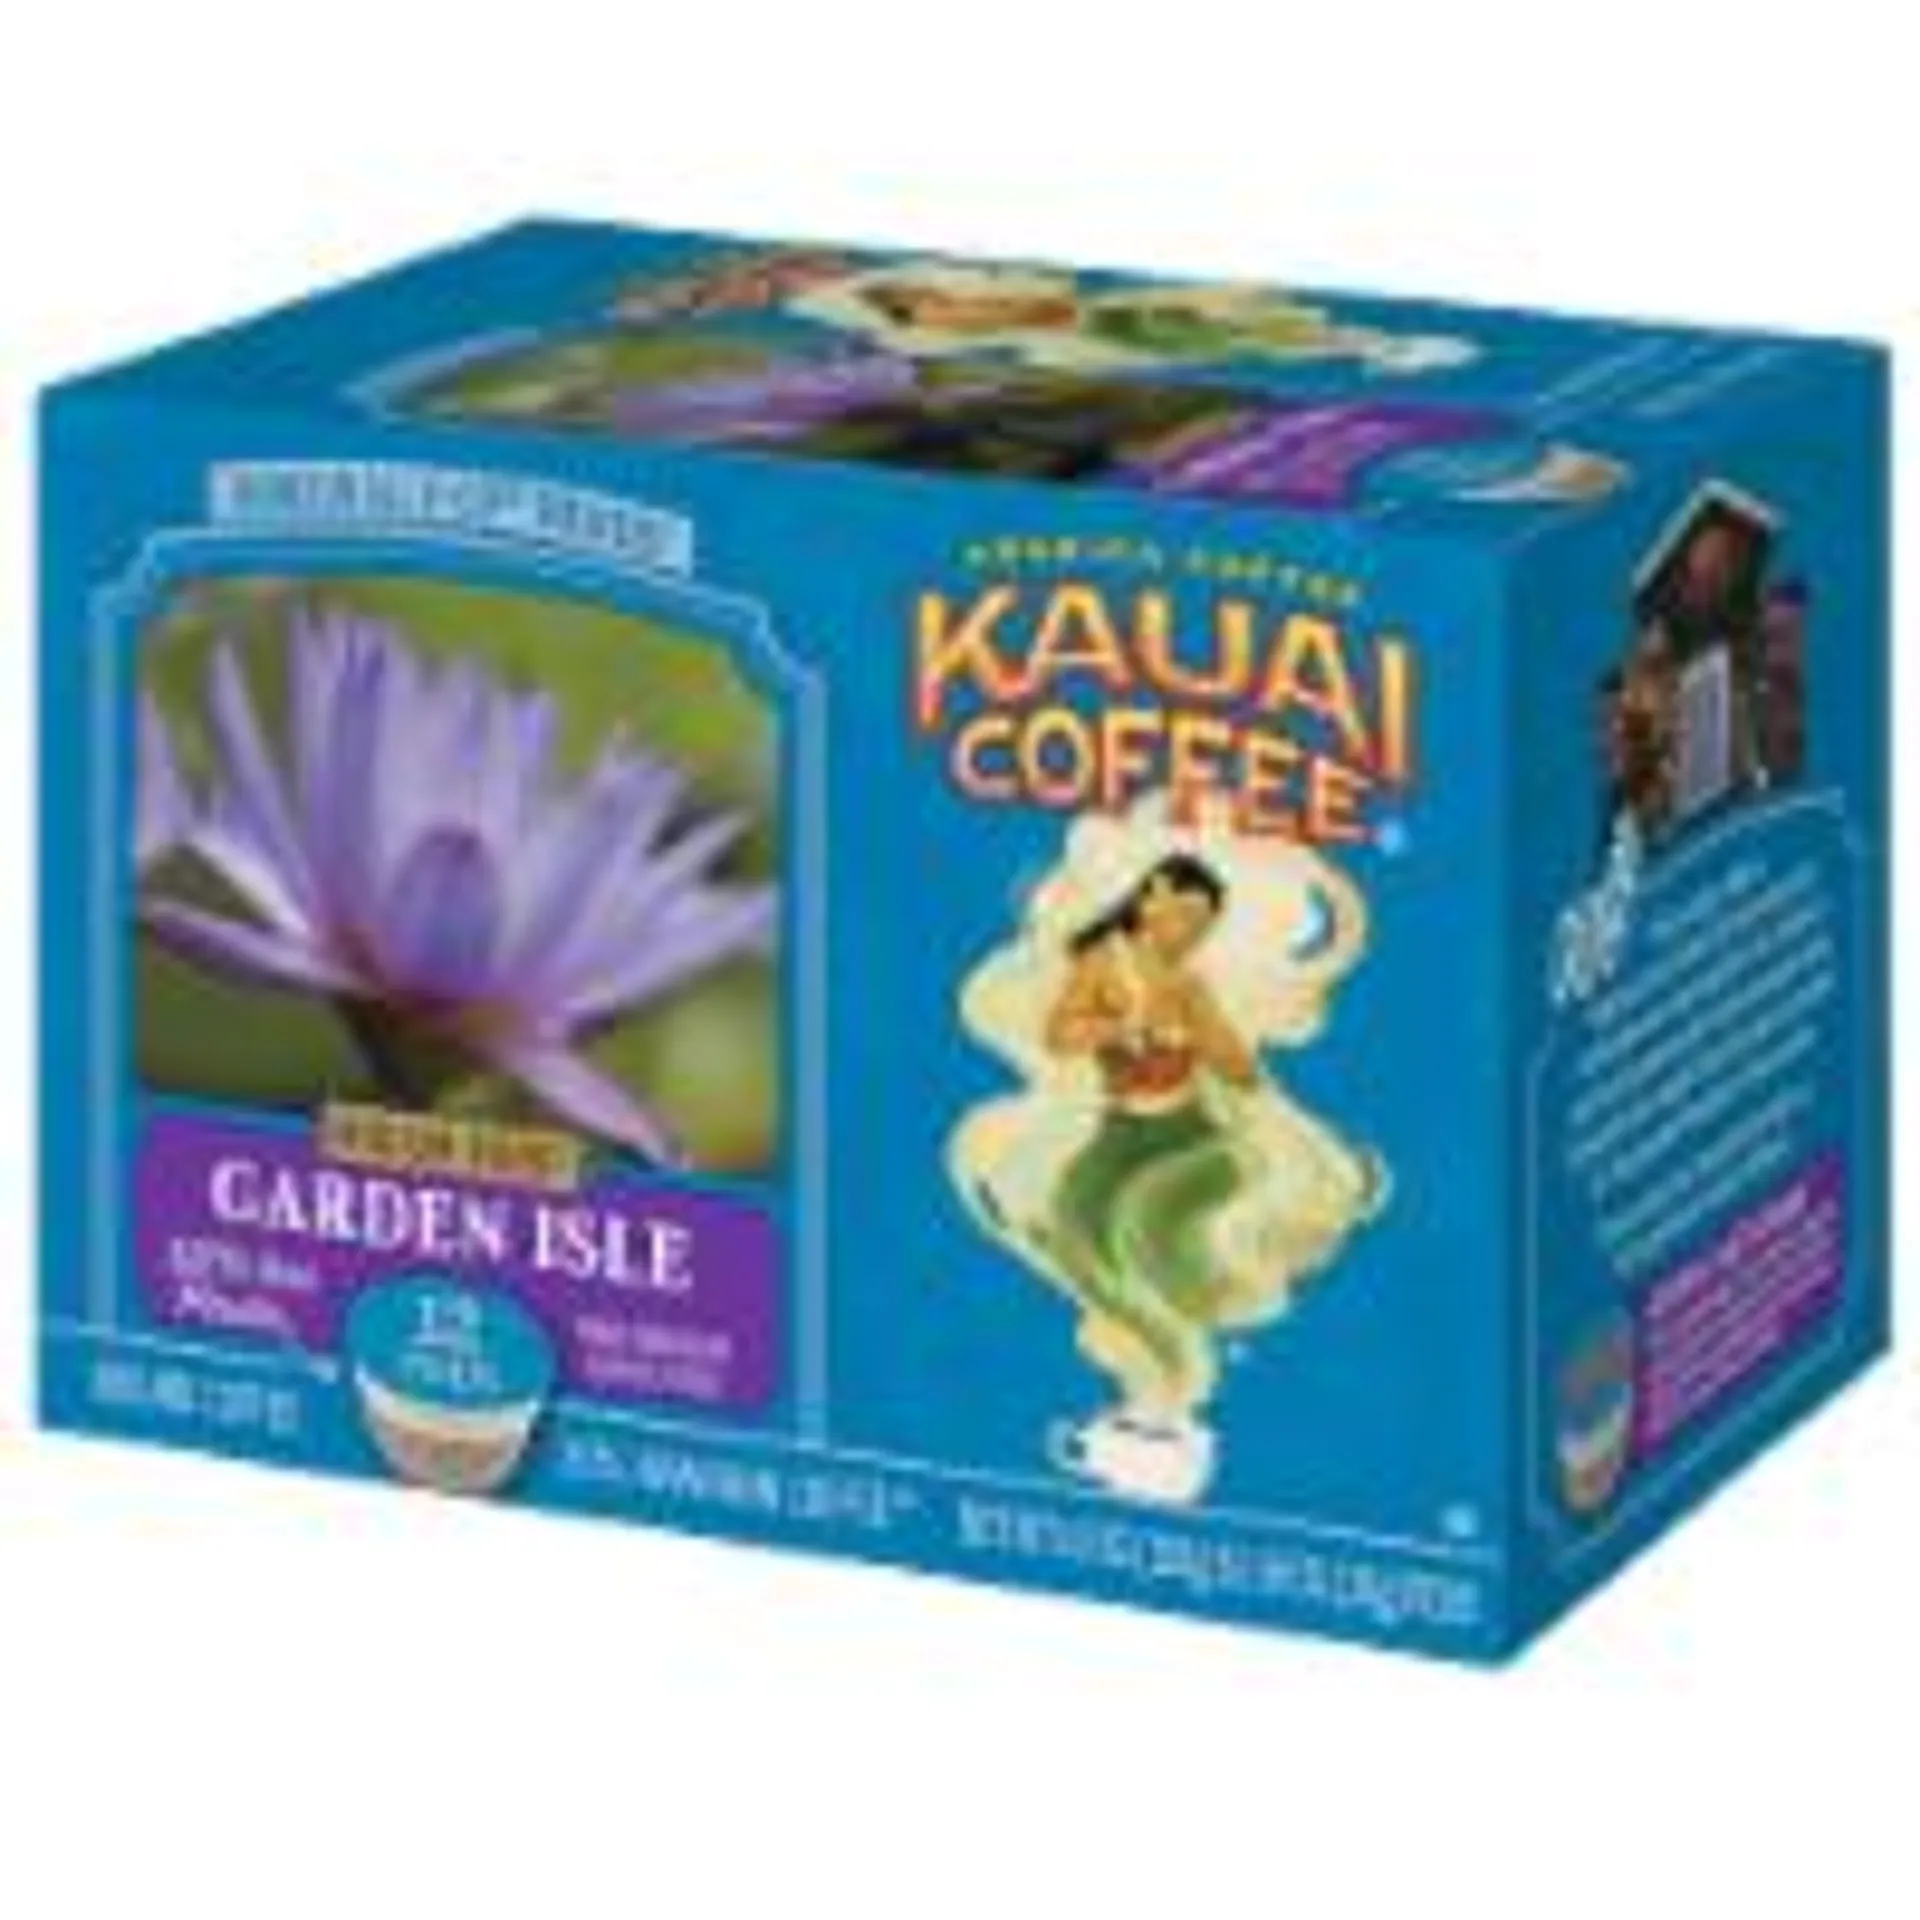 Kauai Coffee® Garden Isle Medium Roast Coffee Pods